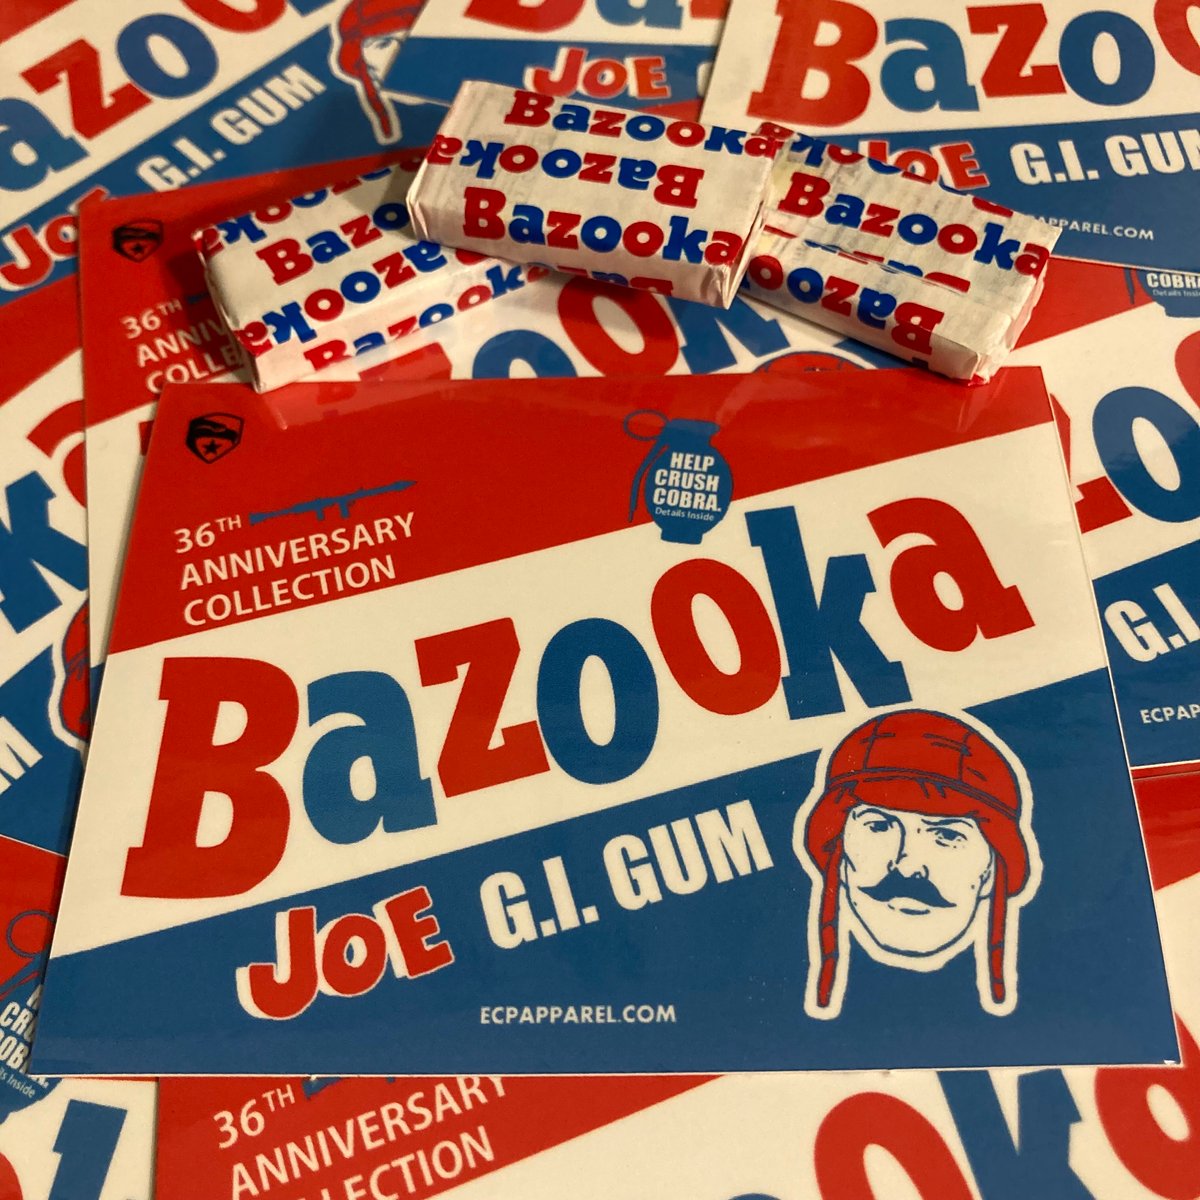 “Bazooka G.I. Gum” Die-cut Sticker